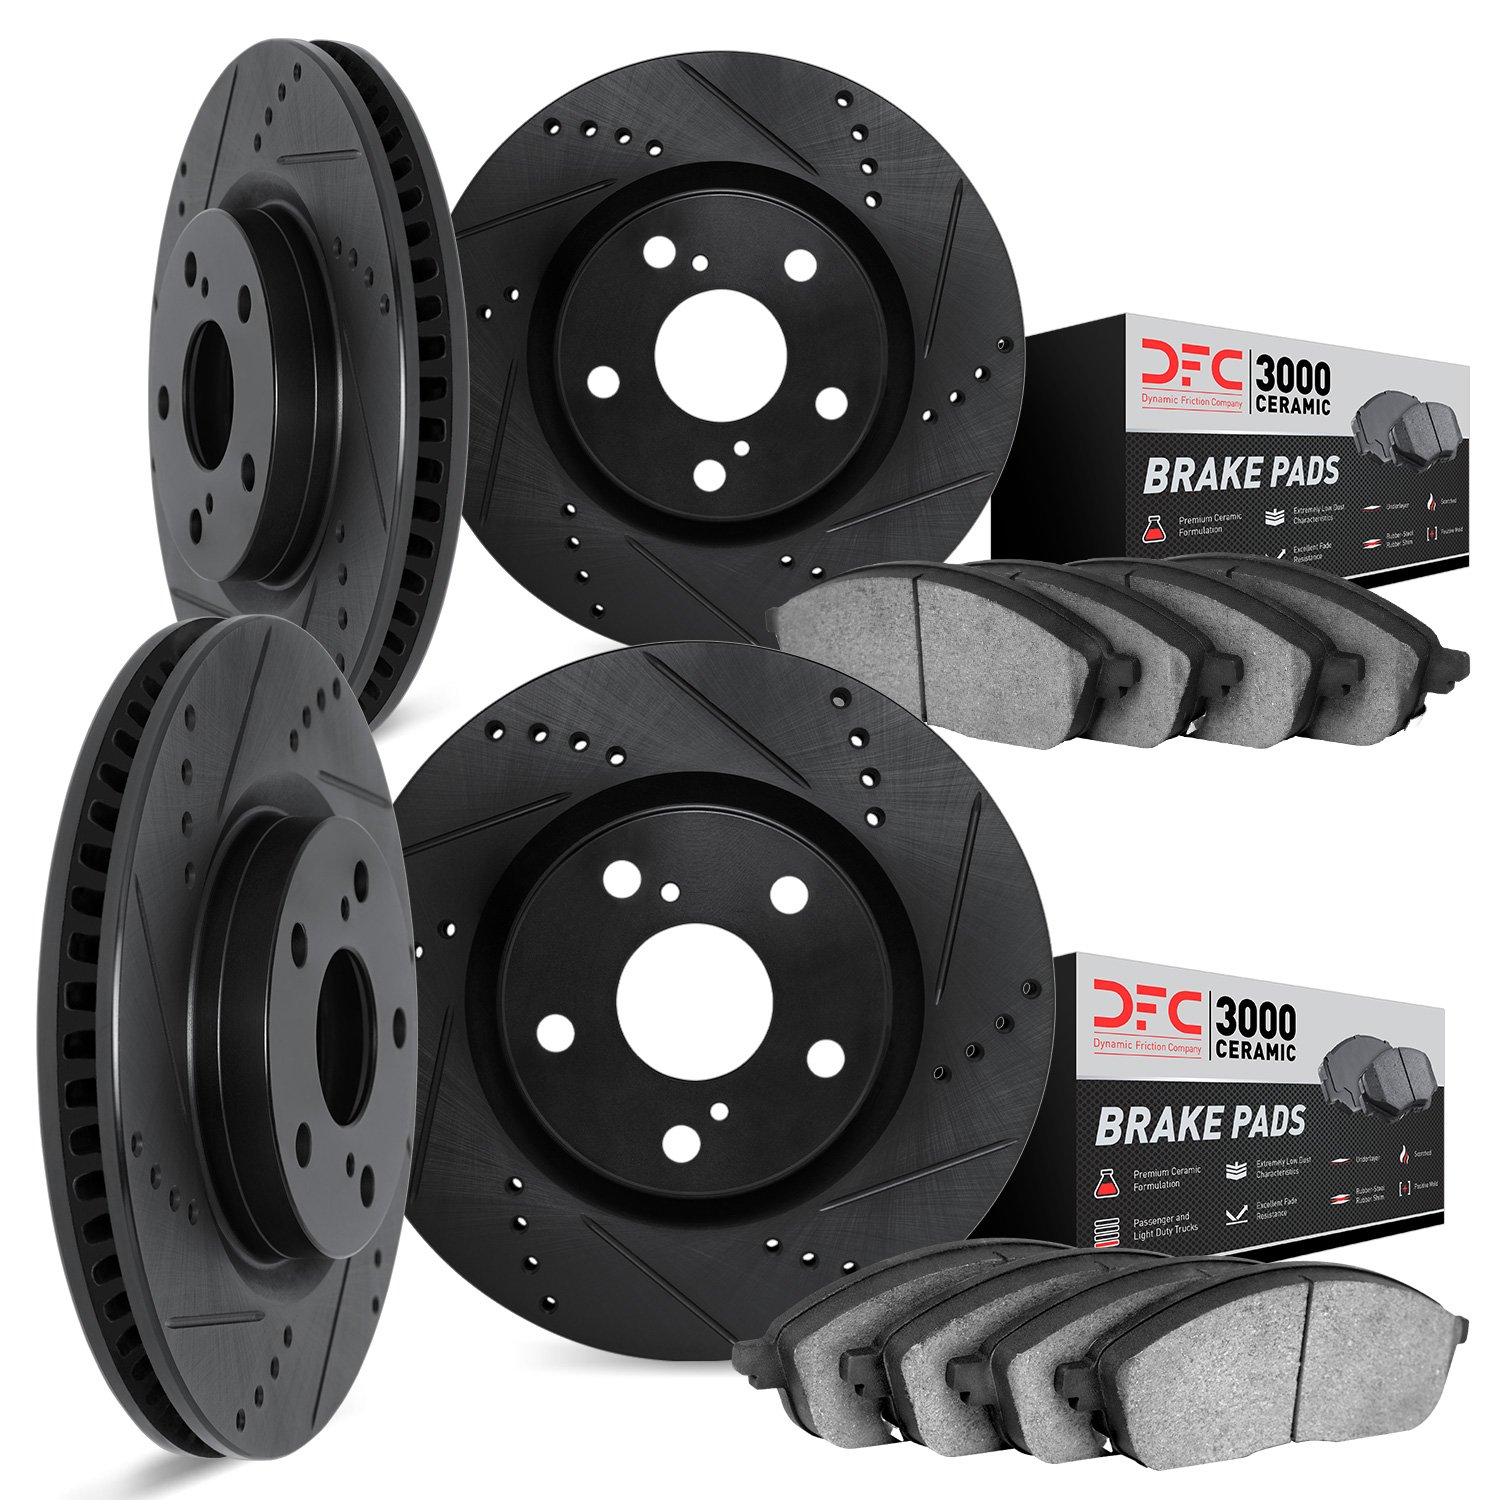 8304-75010 Drilled/Slotted Brake Rotors with 3000-Series Ceramic Brake Pads Kit [Black], 2006-2013 Lexus/Toyota/Scion, Position: